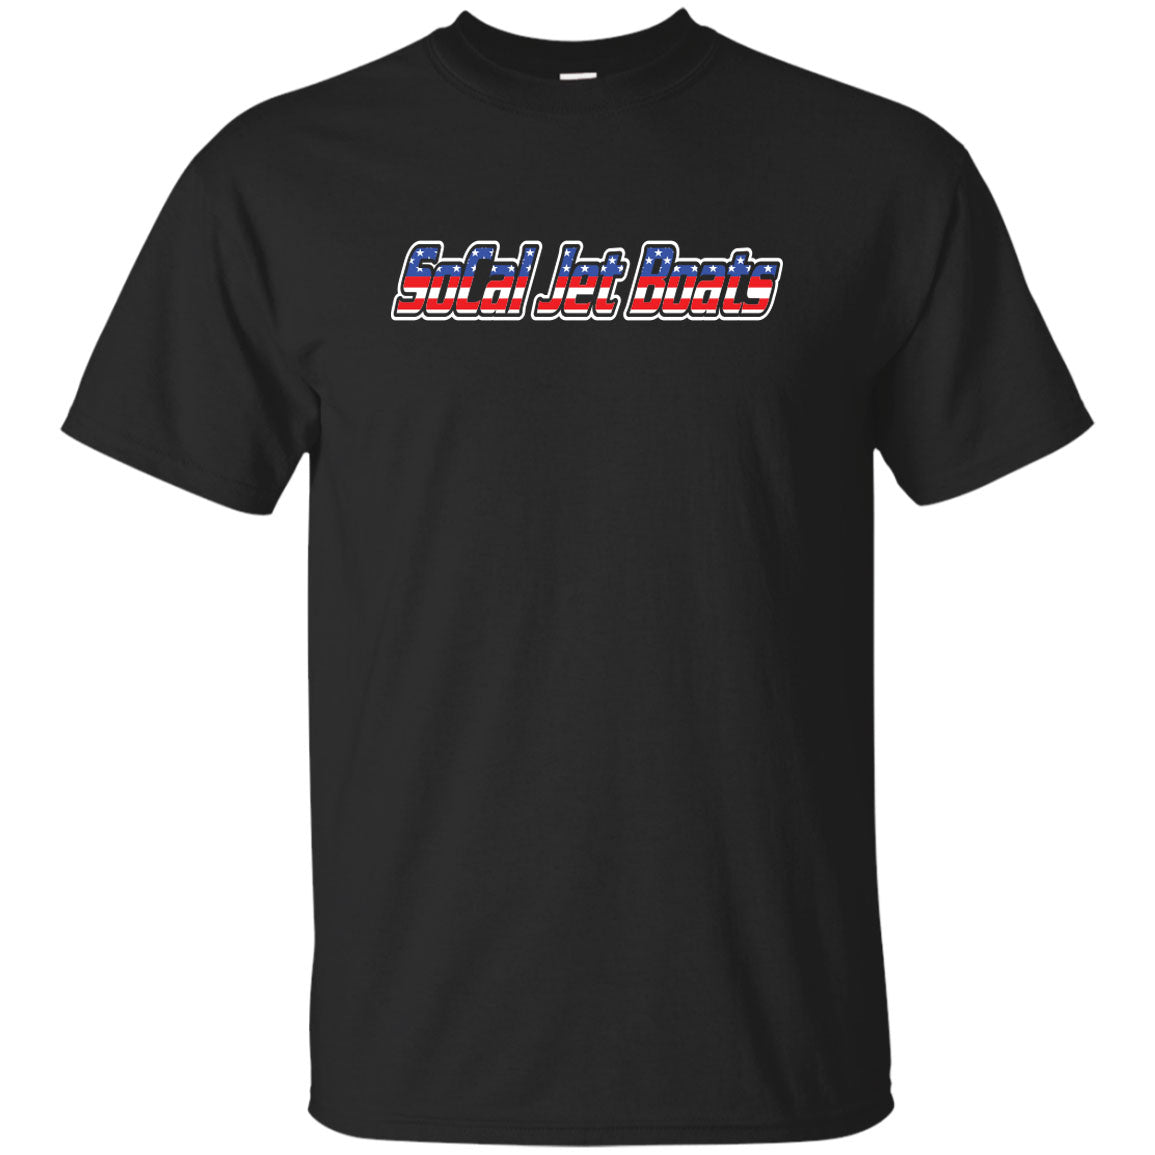 The Patriot Jet Boat T-Shirt